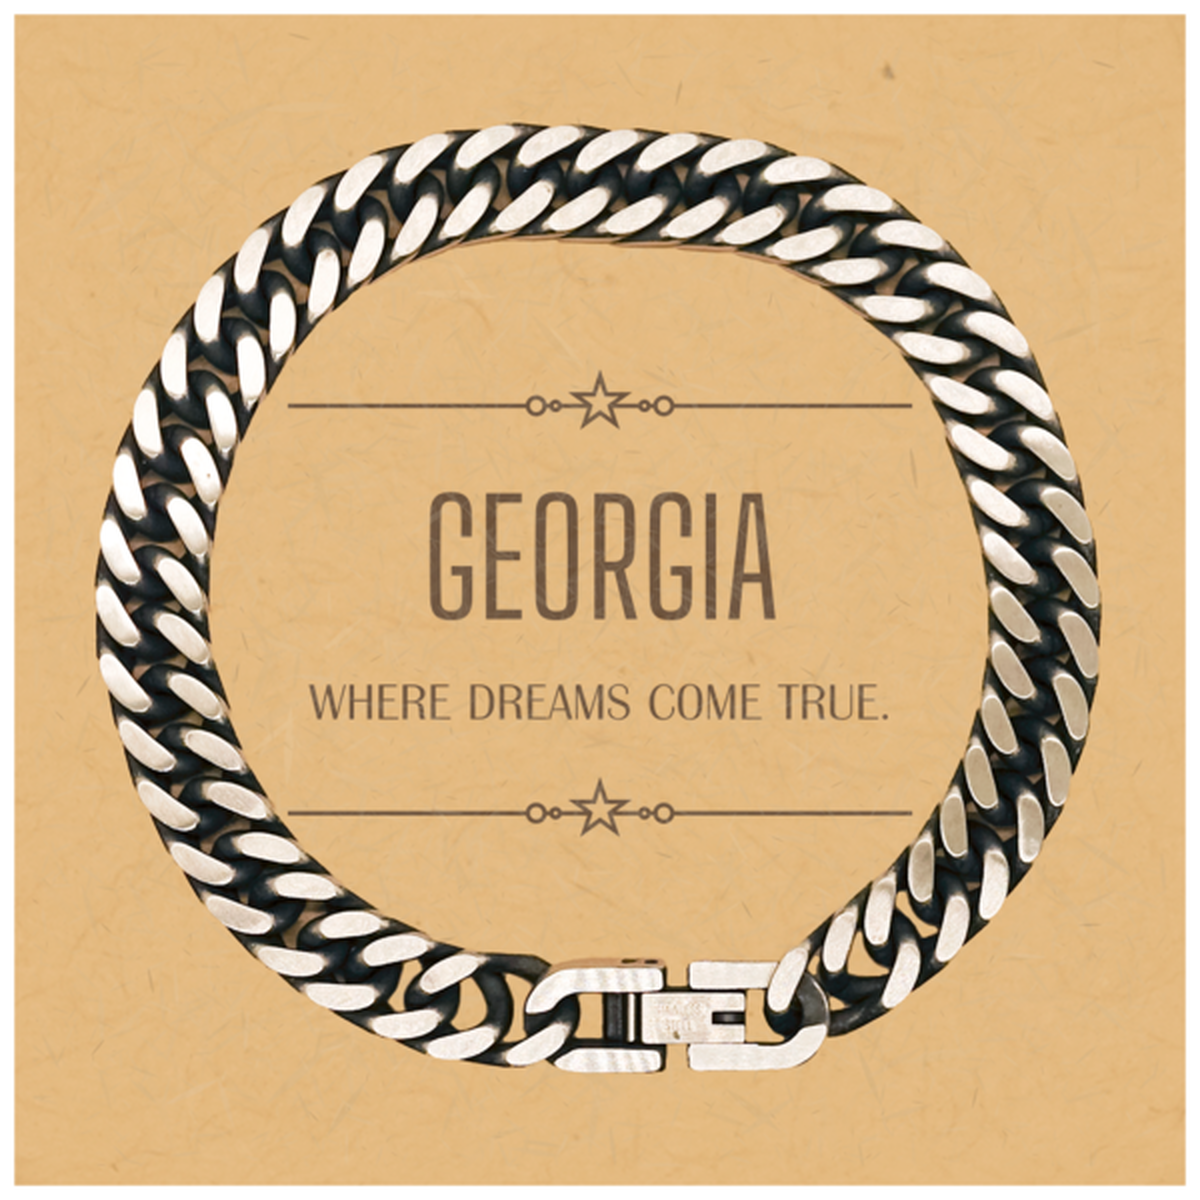 Love Georgia State Cuban Link Chain Bracelet, Georgia Where dreams come true, Birthday Christmas Inspirational Gifts For Georgia Men, Women, Friends